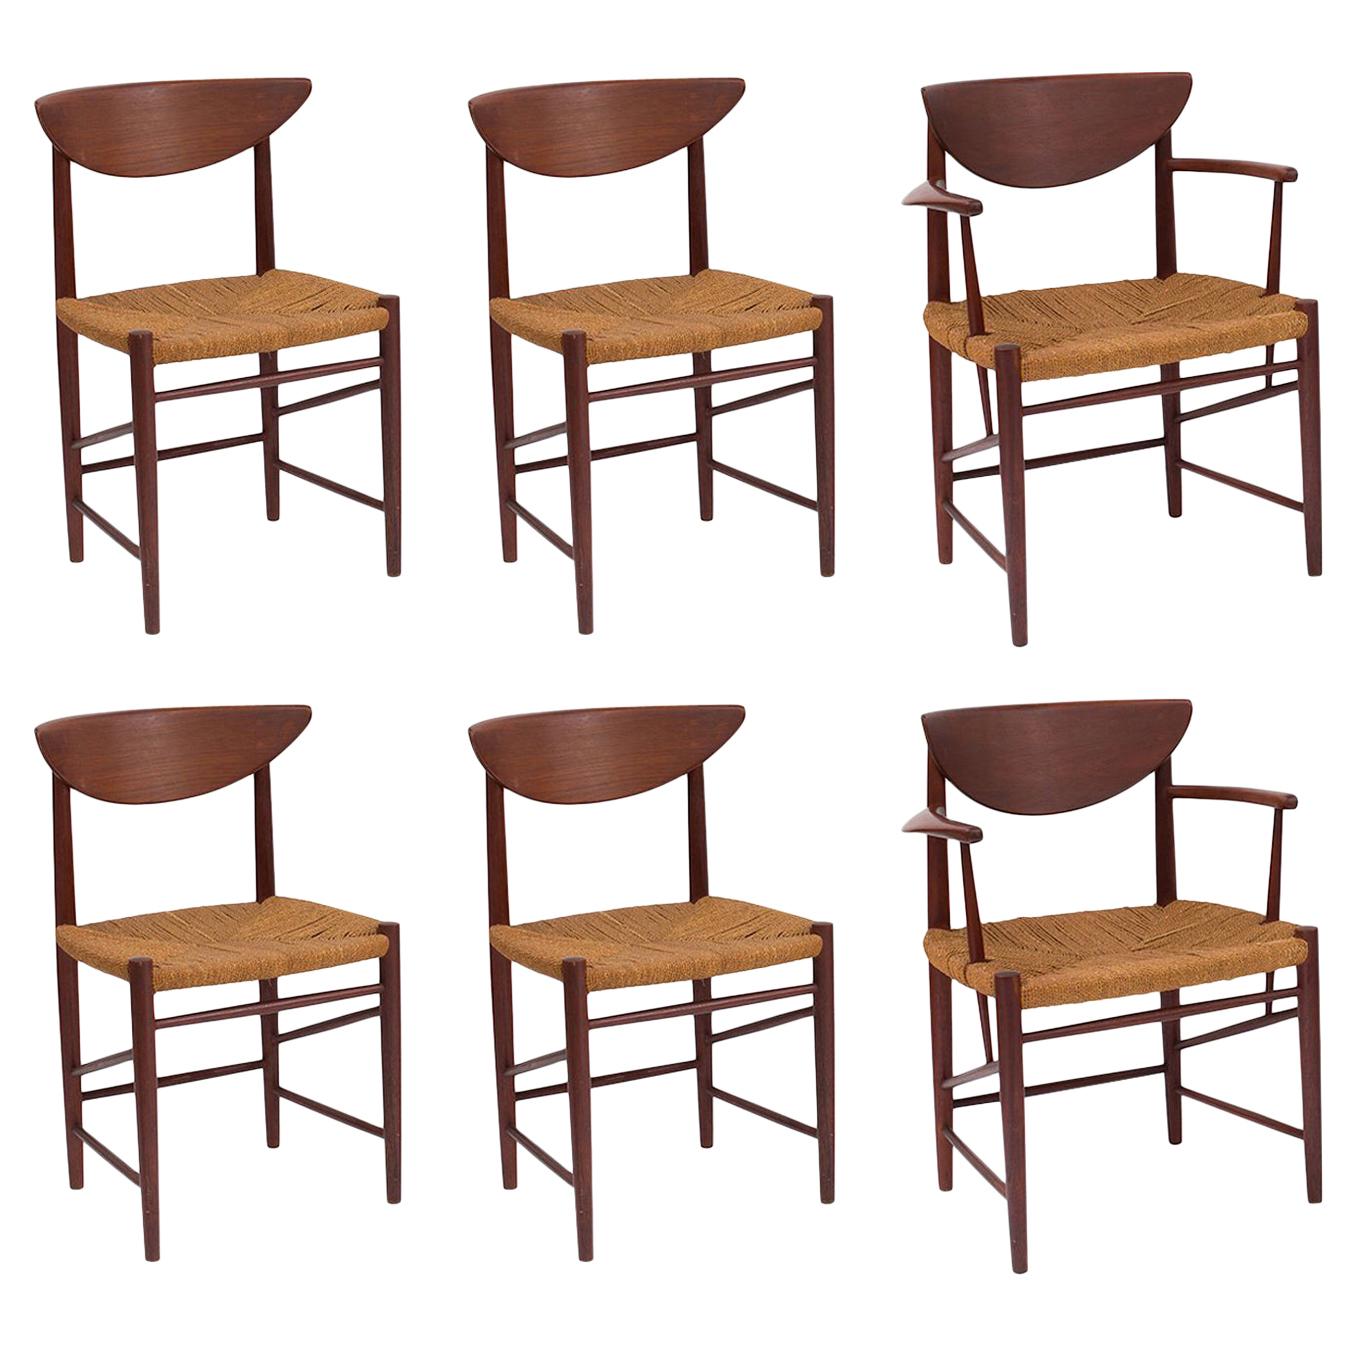 Hvidt & Mølgaard-Nielsen Teak and Cord Dining Chairs, Set of 6